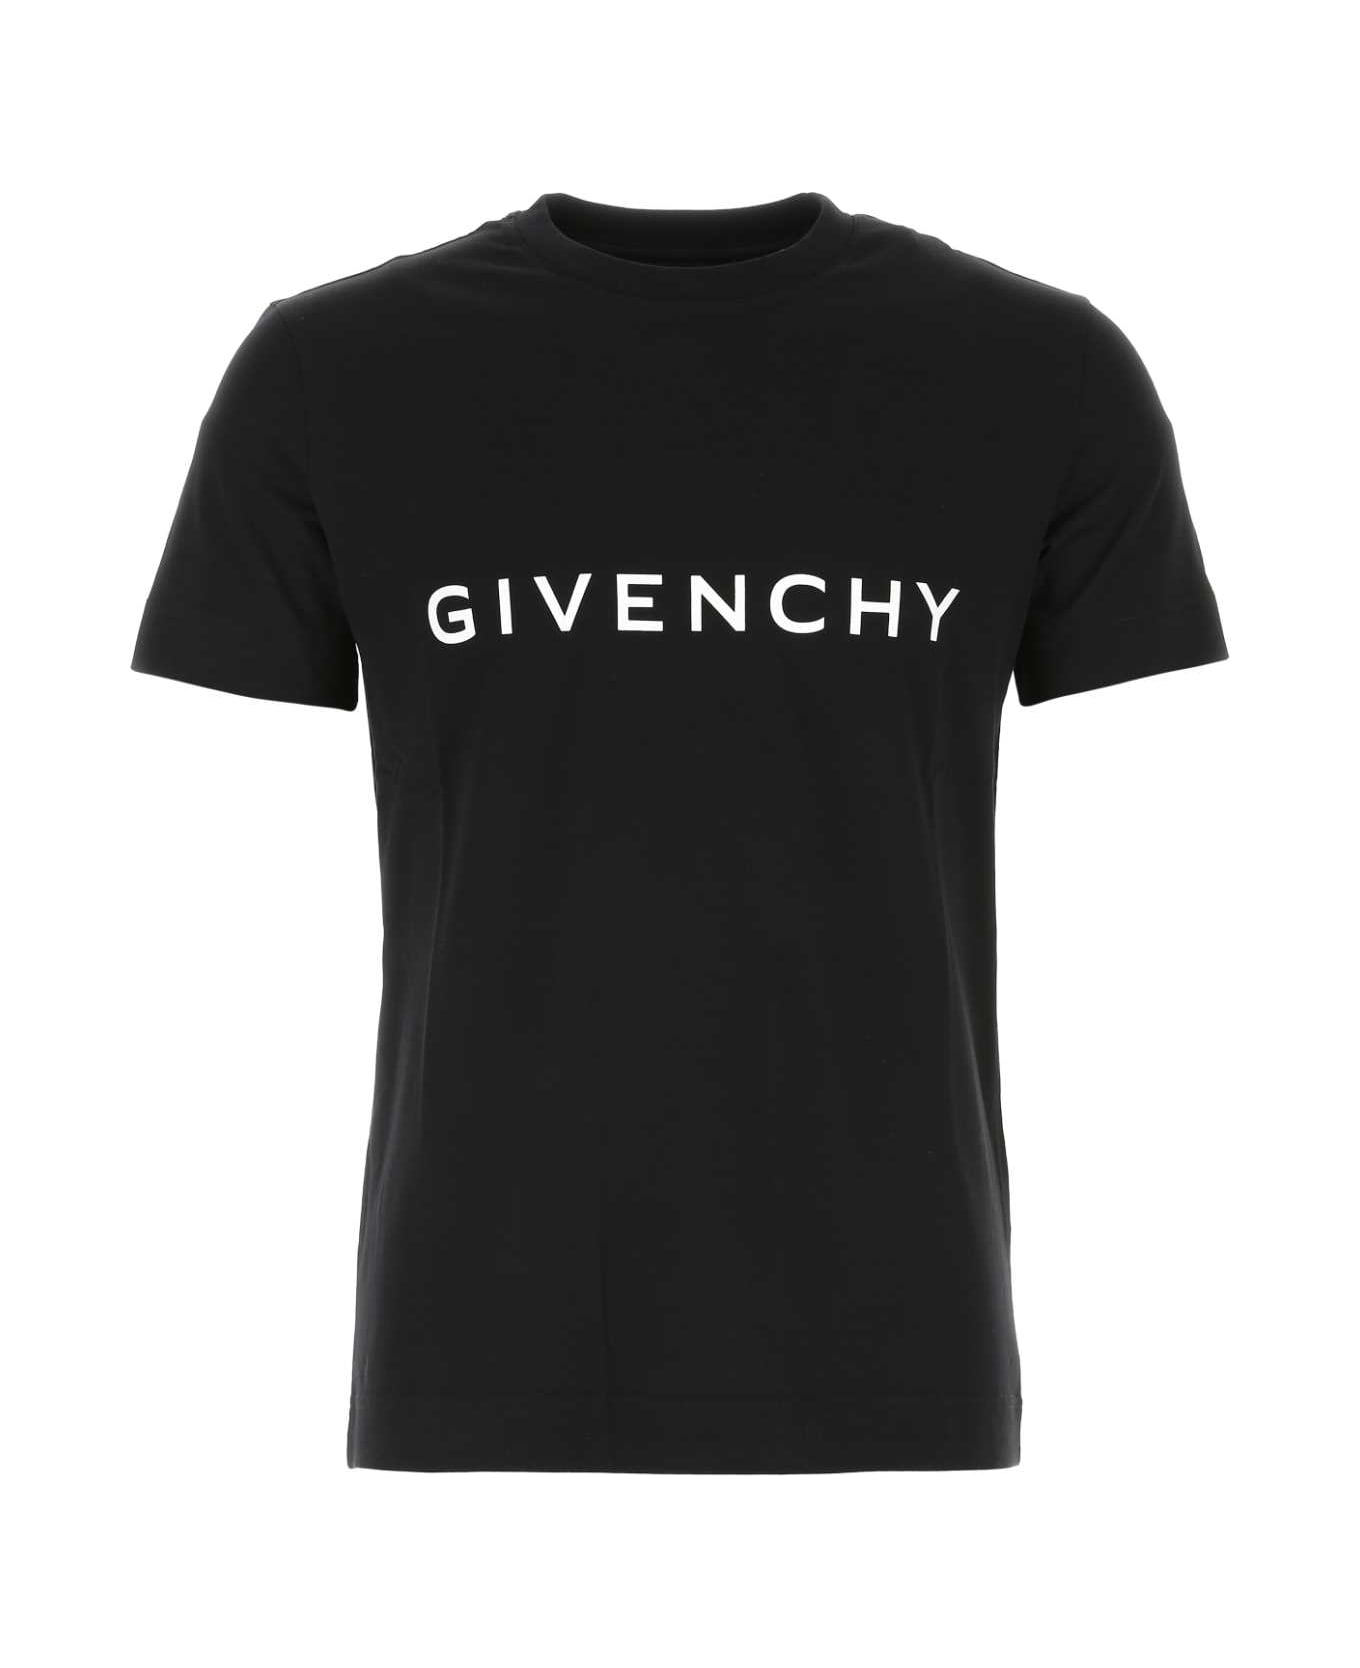 Givenchy Black Cotton T-shirt - 001